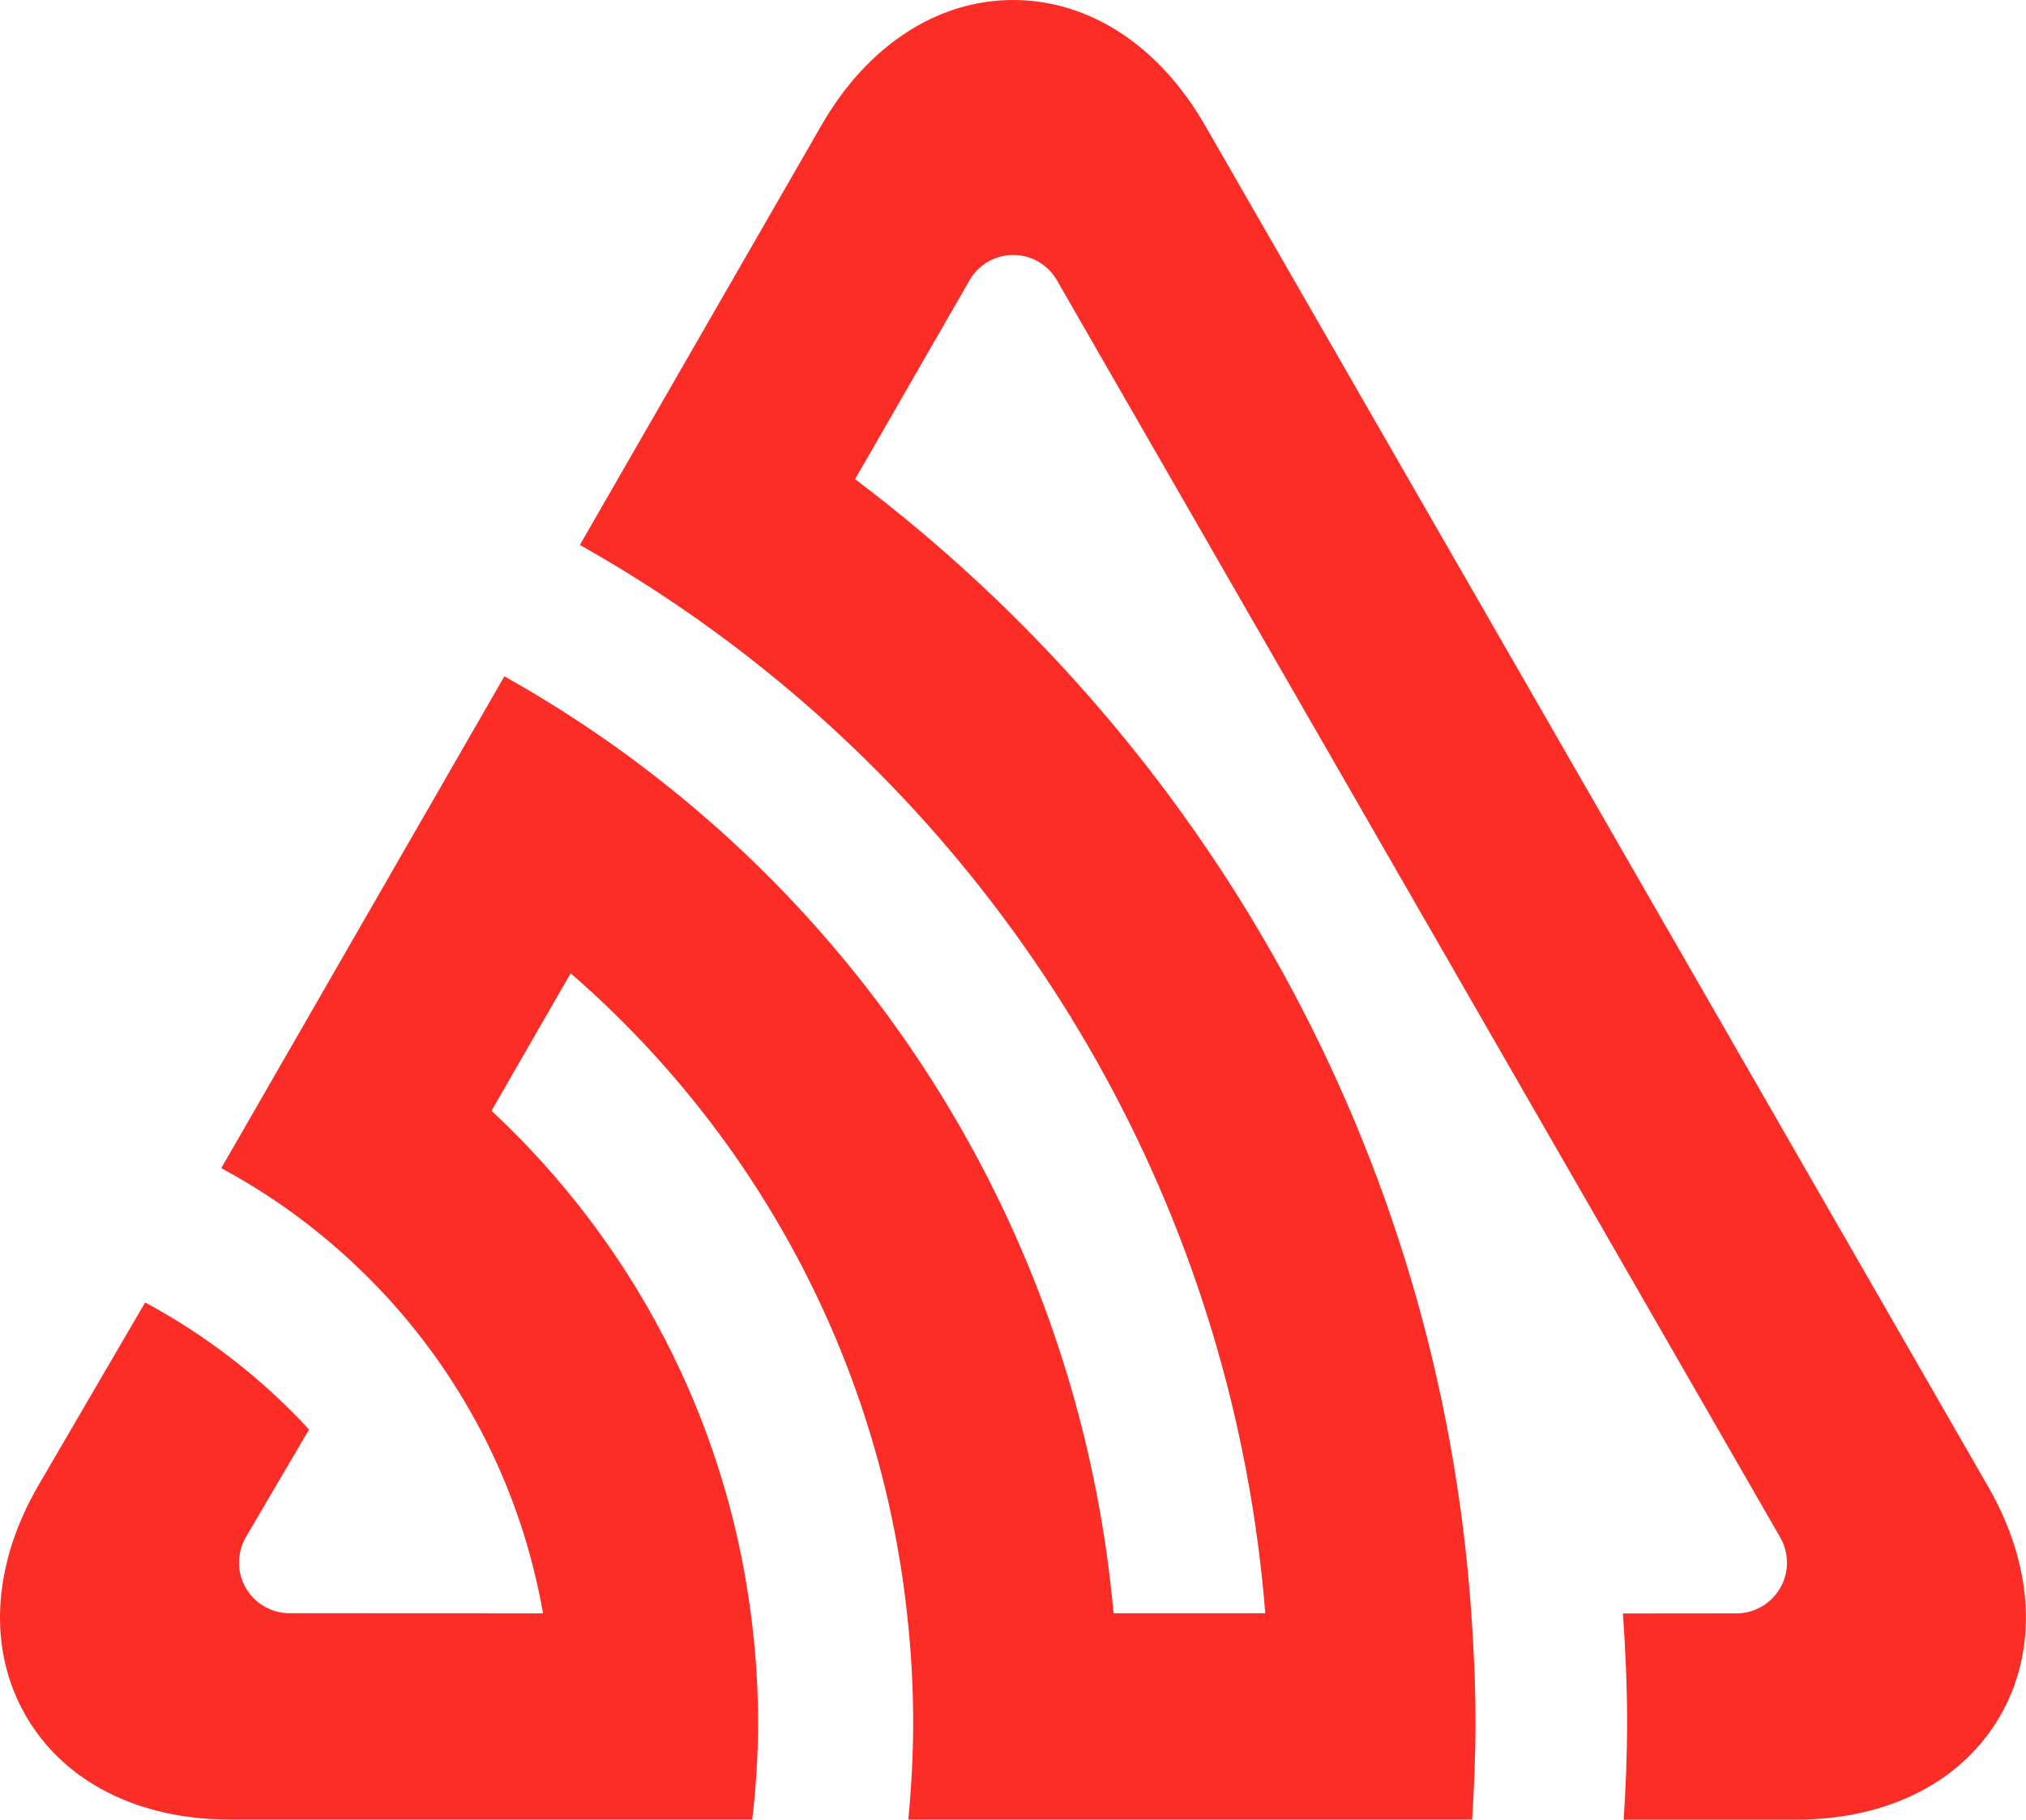 Sentry Logo